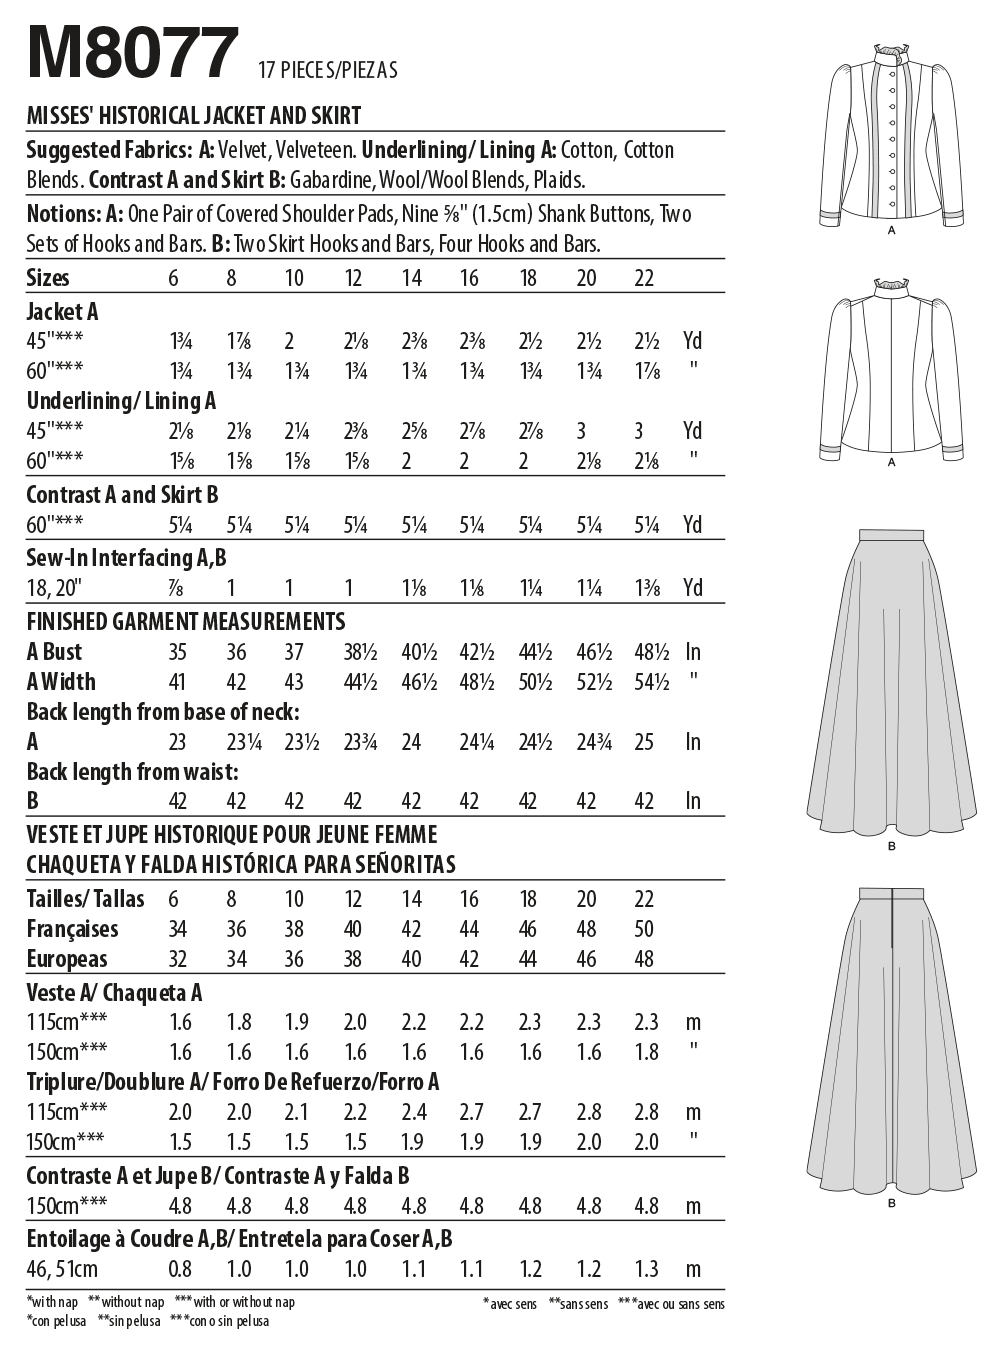 Need Advice: Pattern Size (Body Measurements vs. Finished Garment ...